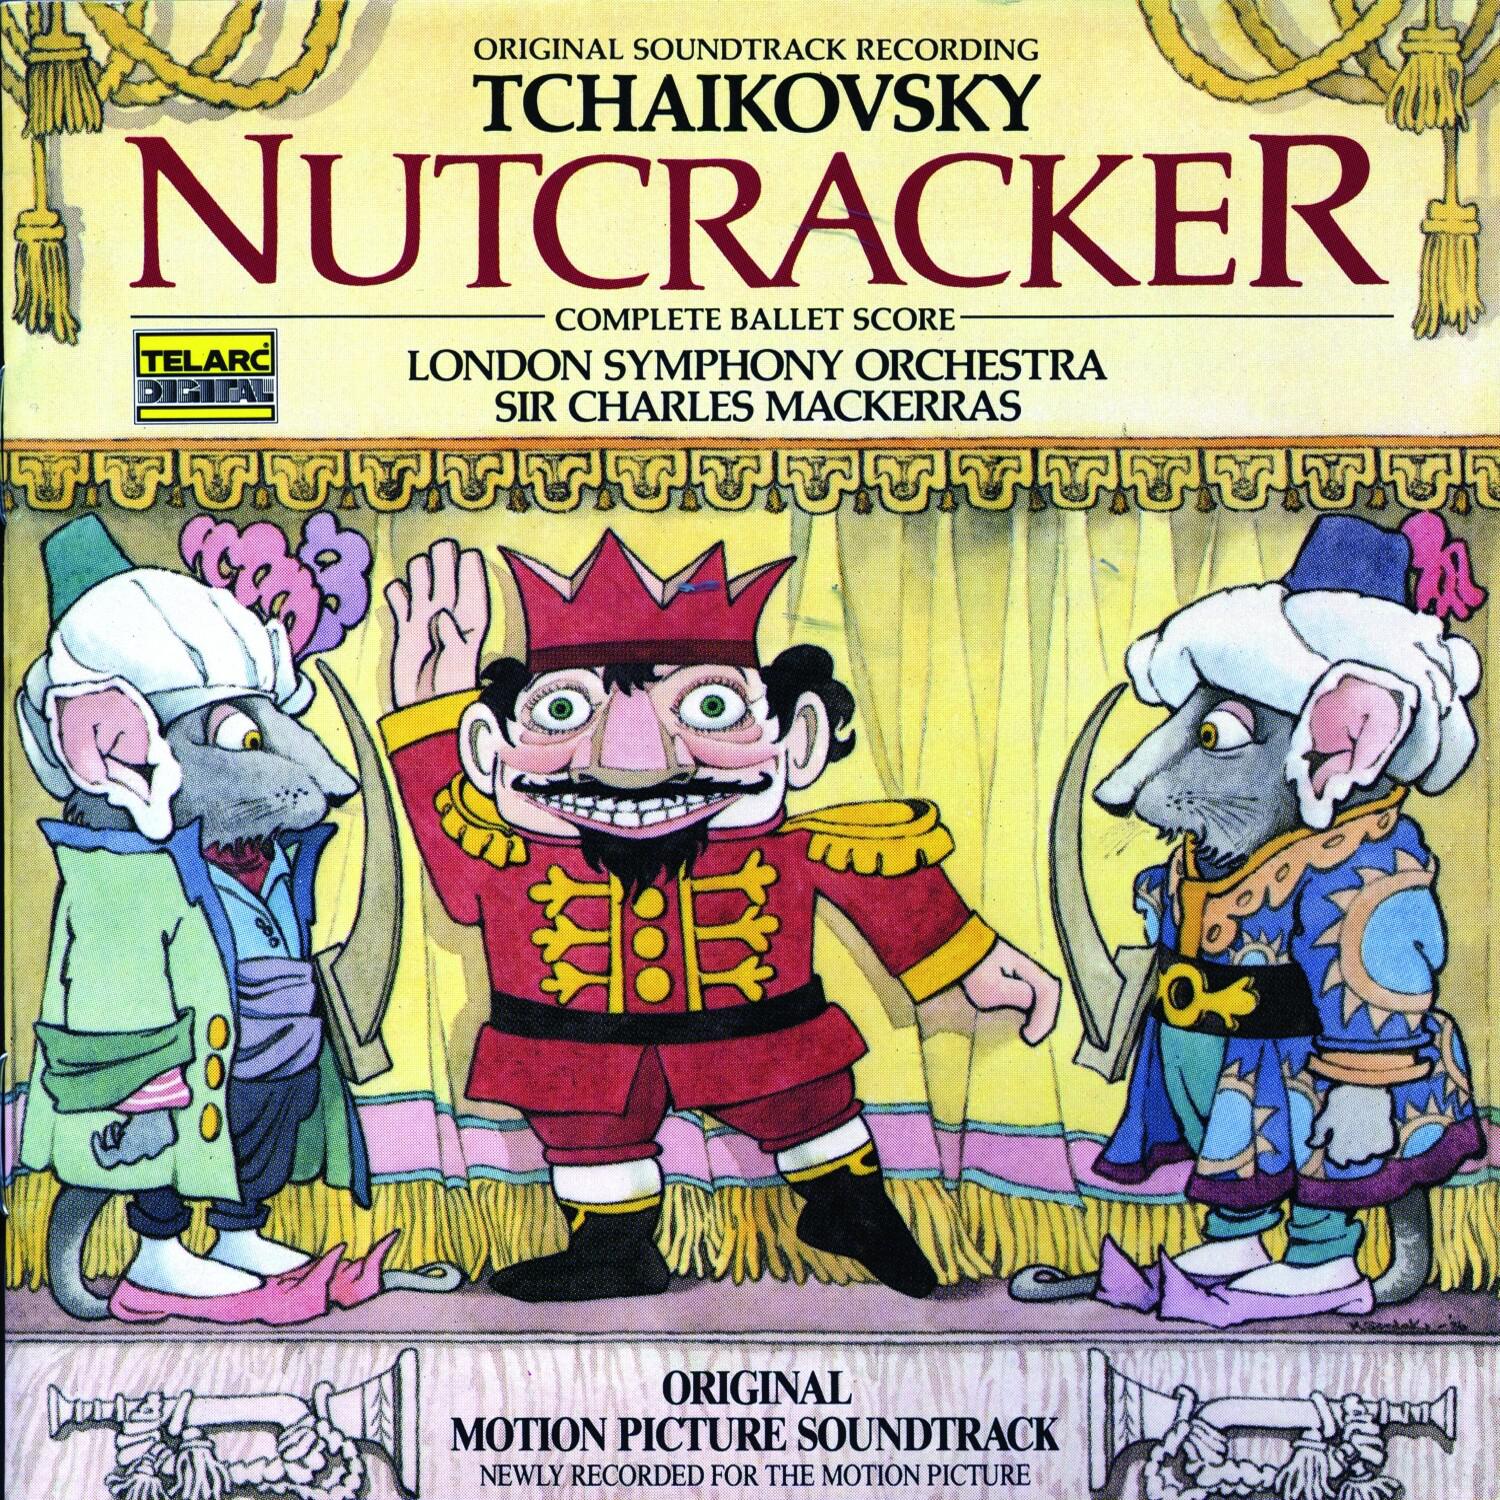 Nutcracker: Act II, Scene 10: The Magic Castle